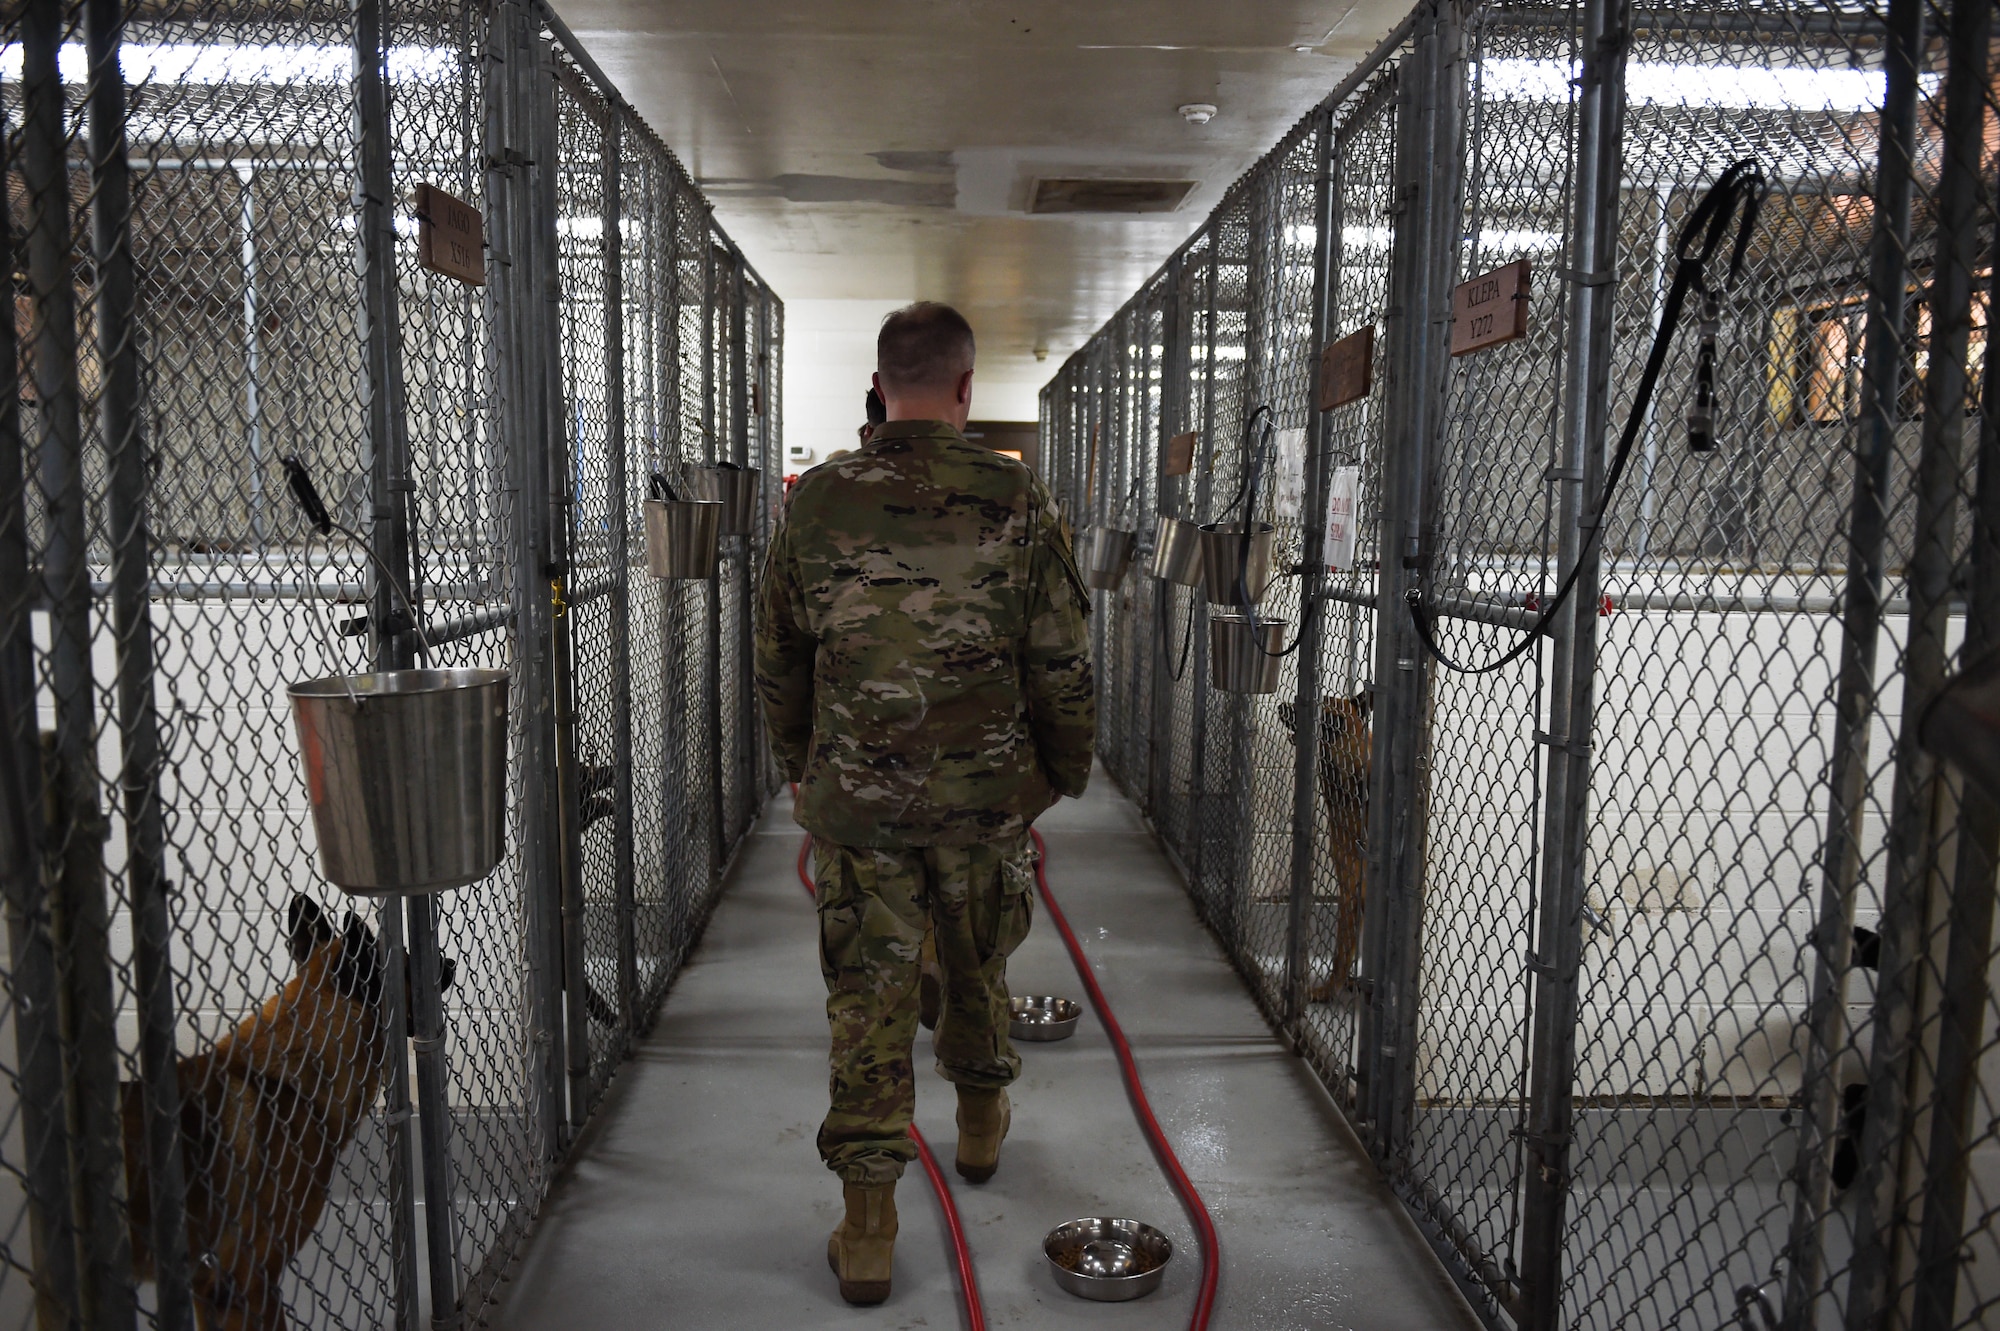 Military members walking through kennels